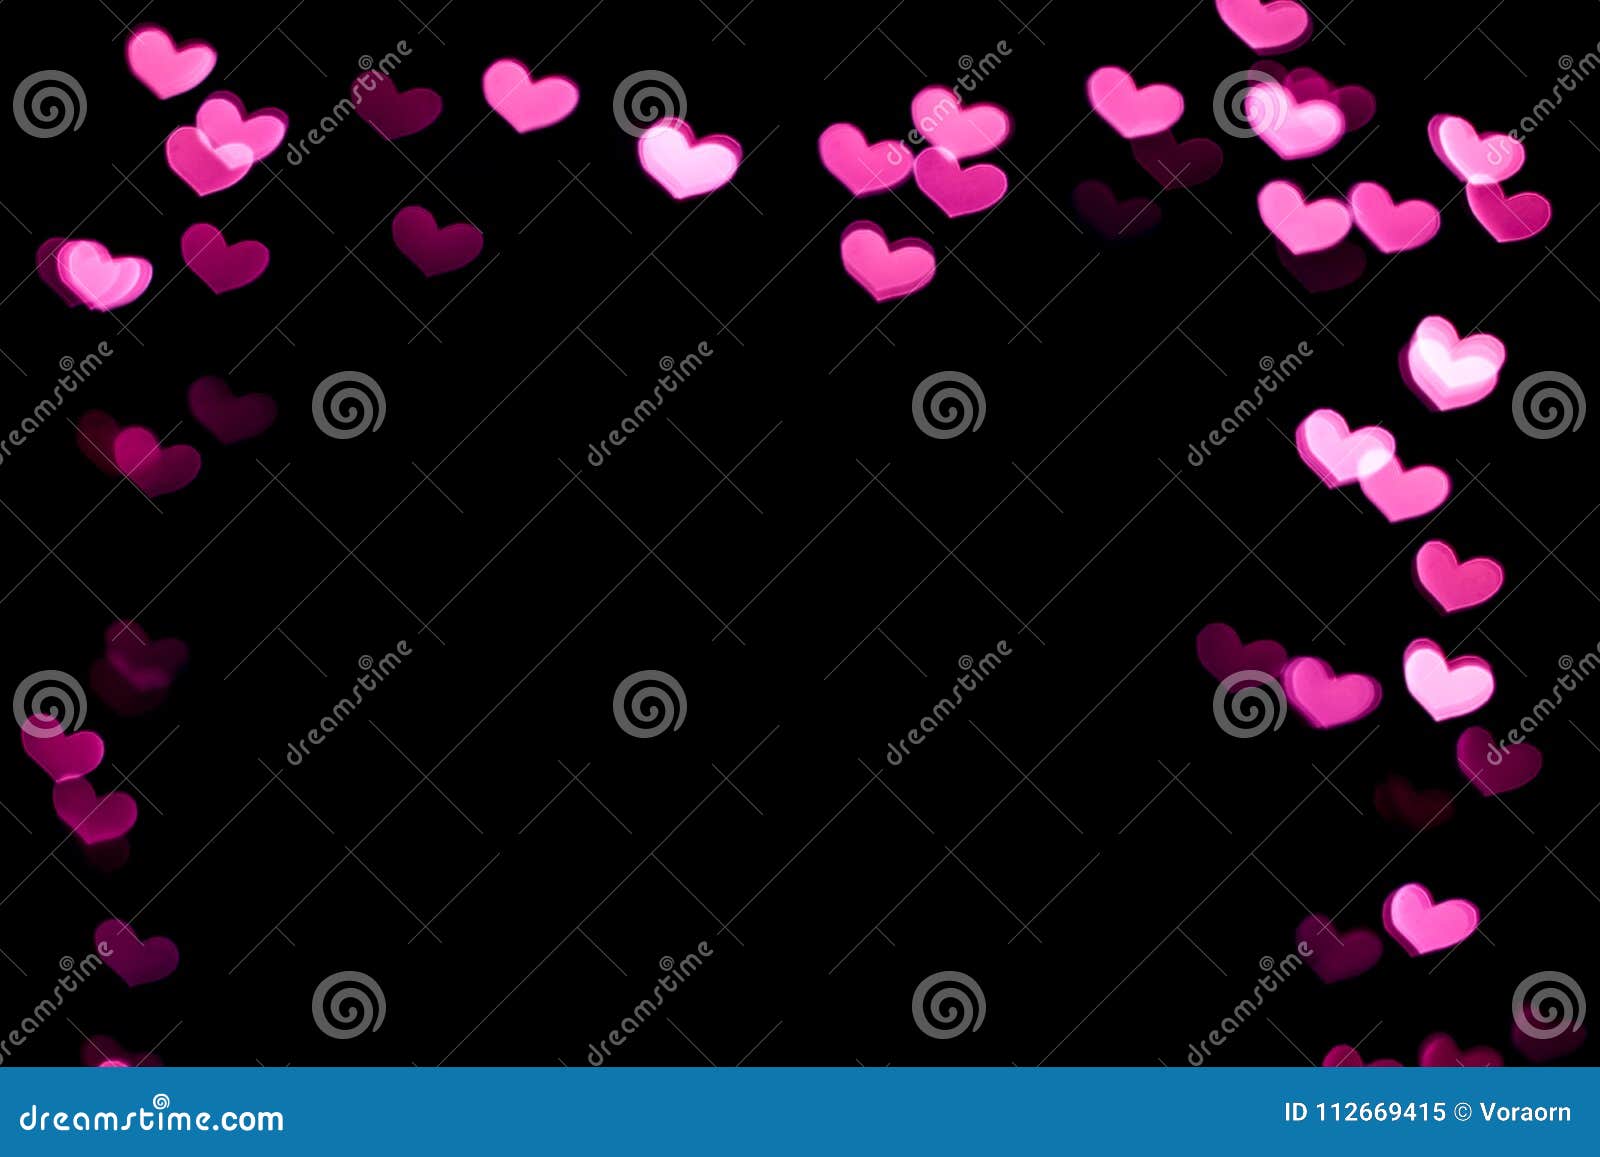 Heart shape bokeh stock image. Image of background, glow - 112669415